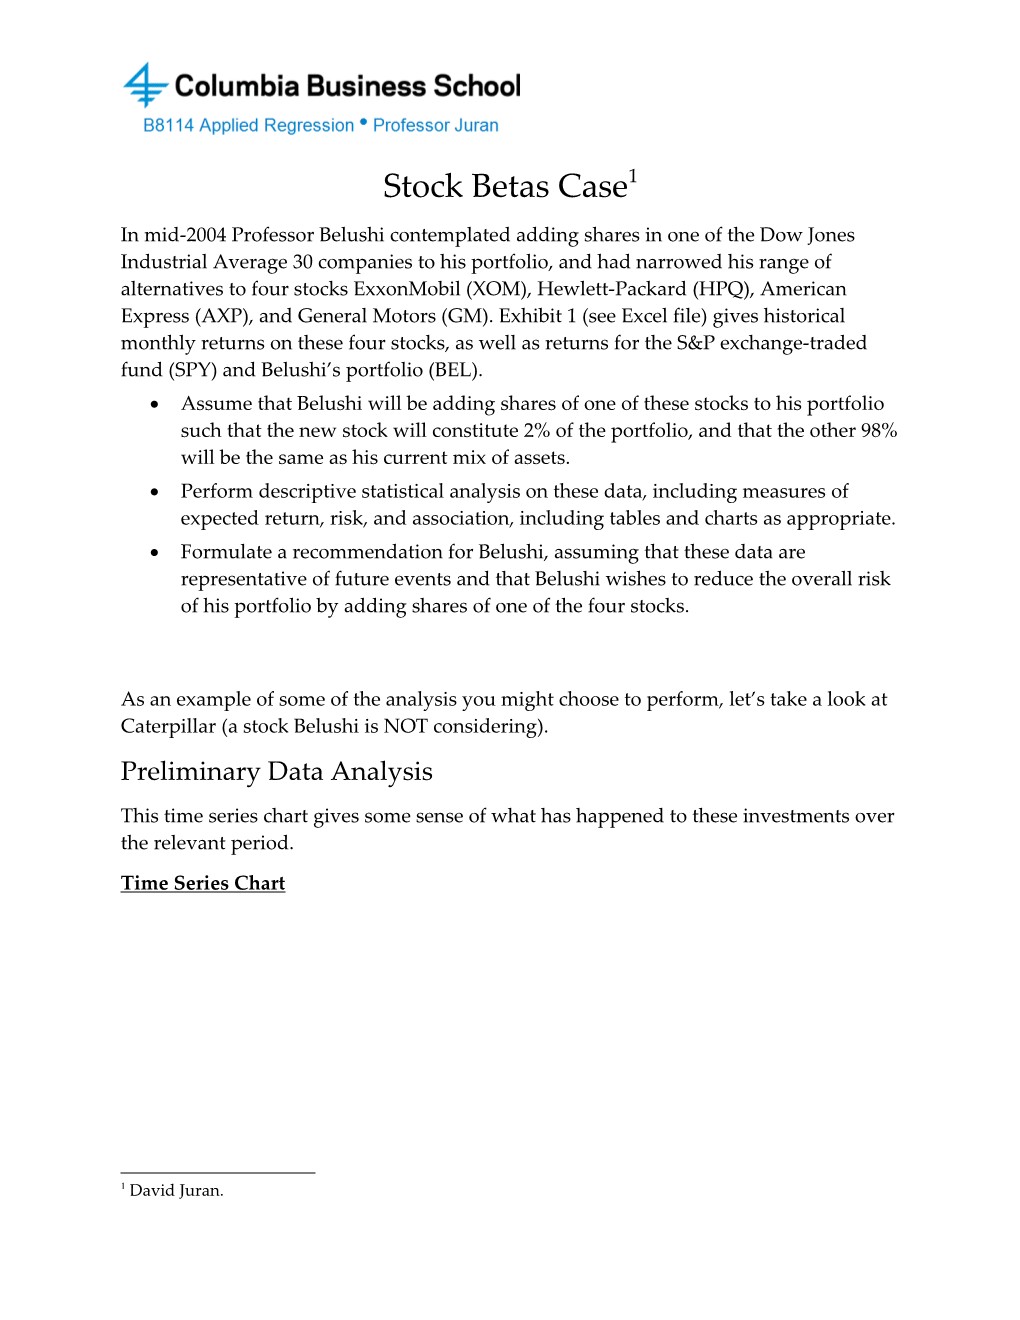 Stock Betas Case 1